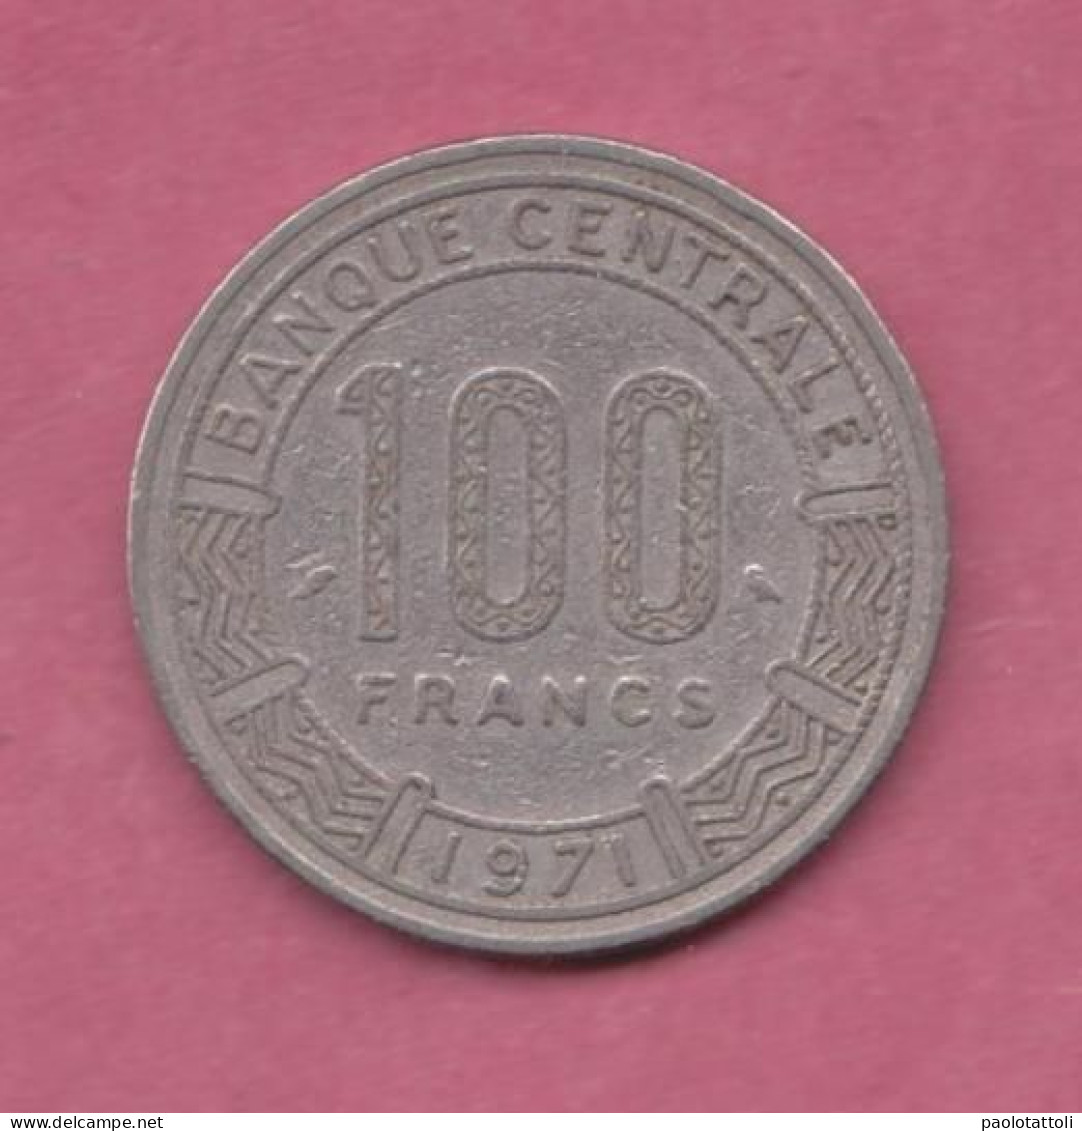 Republique Populaire Du Congo, 1971- 100 Francs- Nickel- Obverse Three Giant Eland. Reverse Denomination - Congo (Democratic Republic 1998)